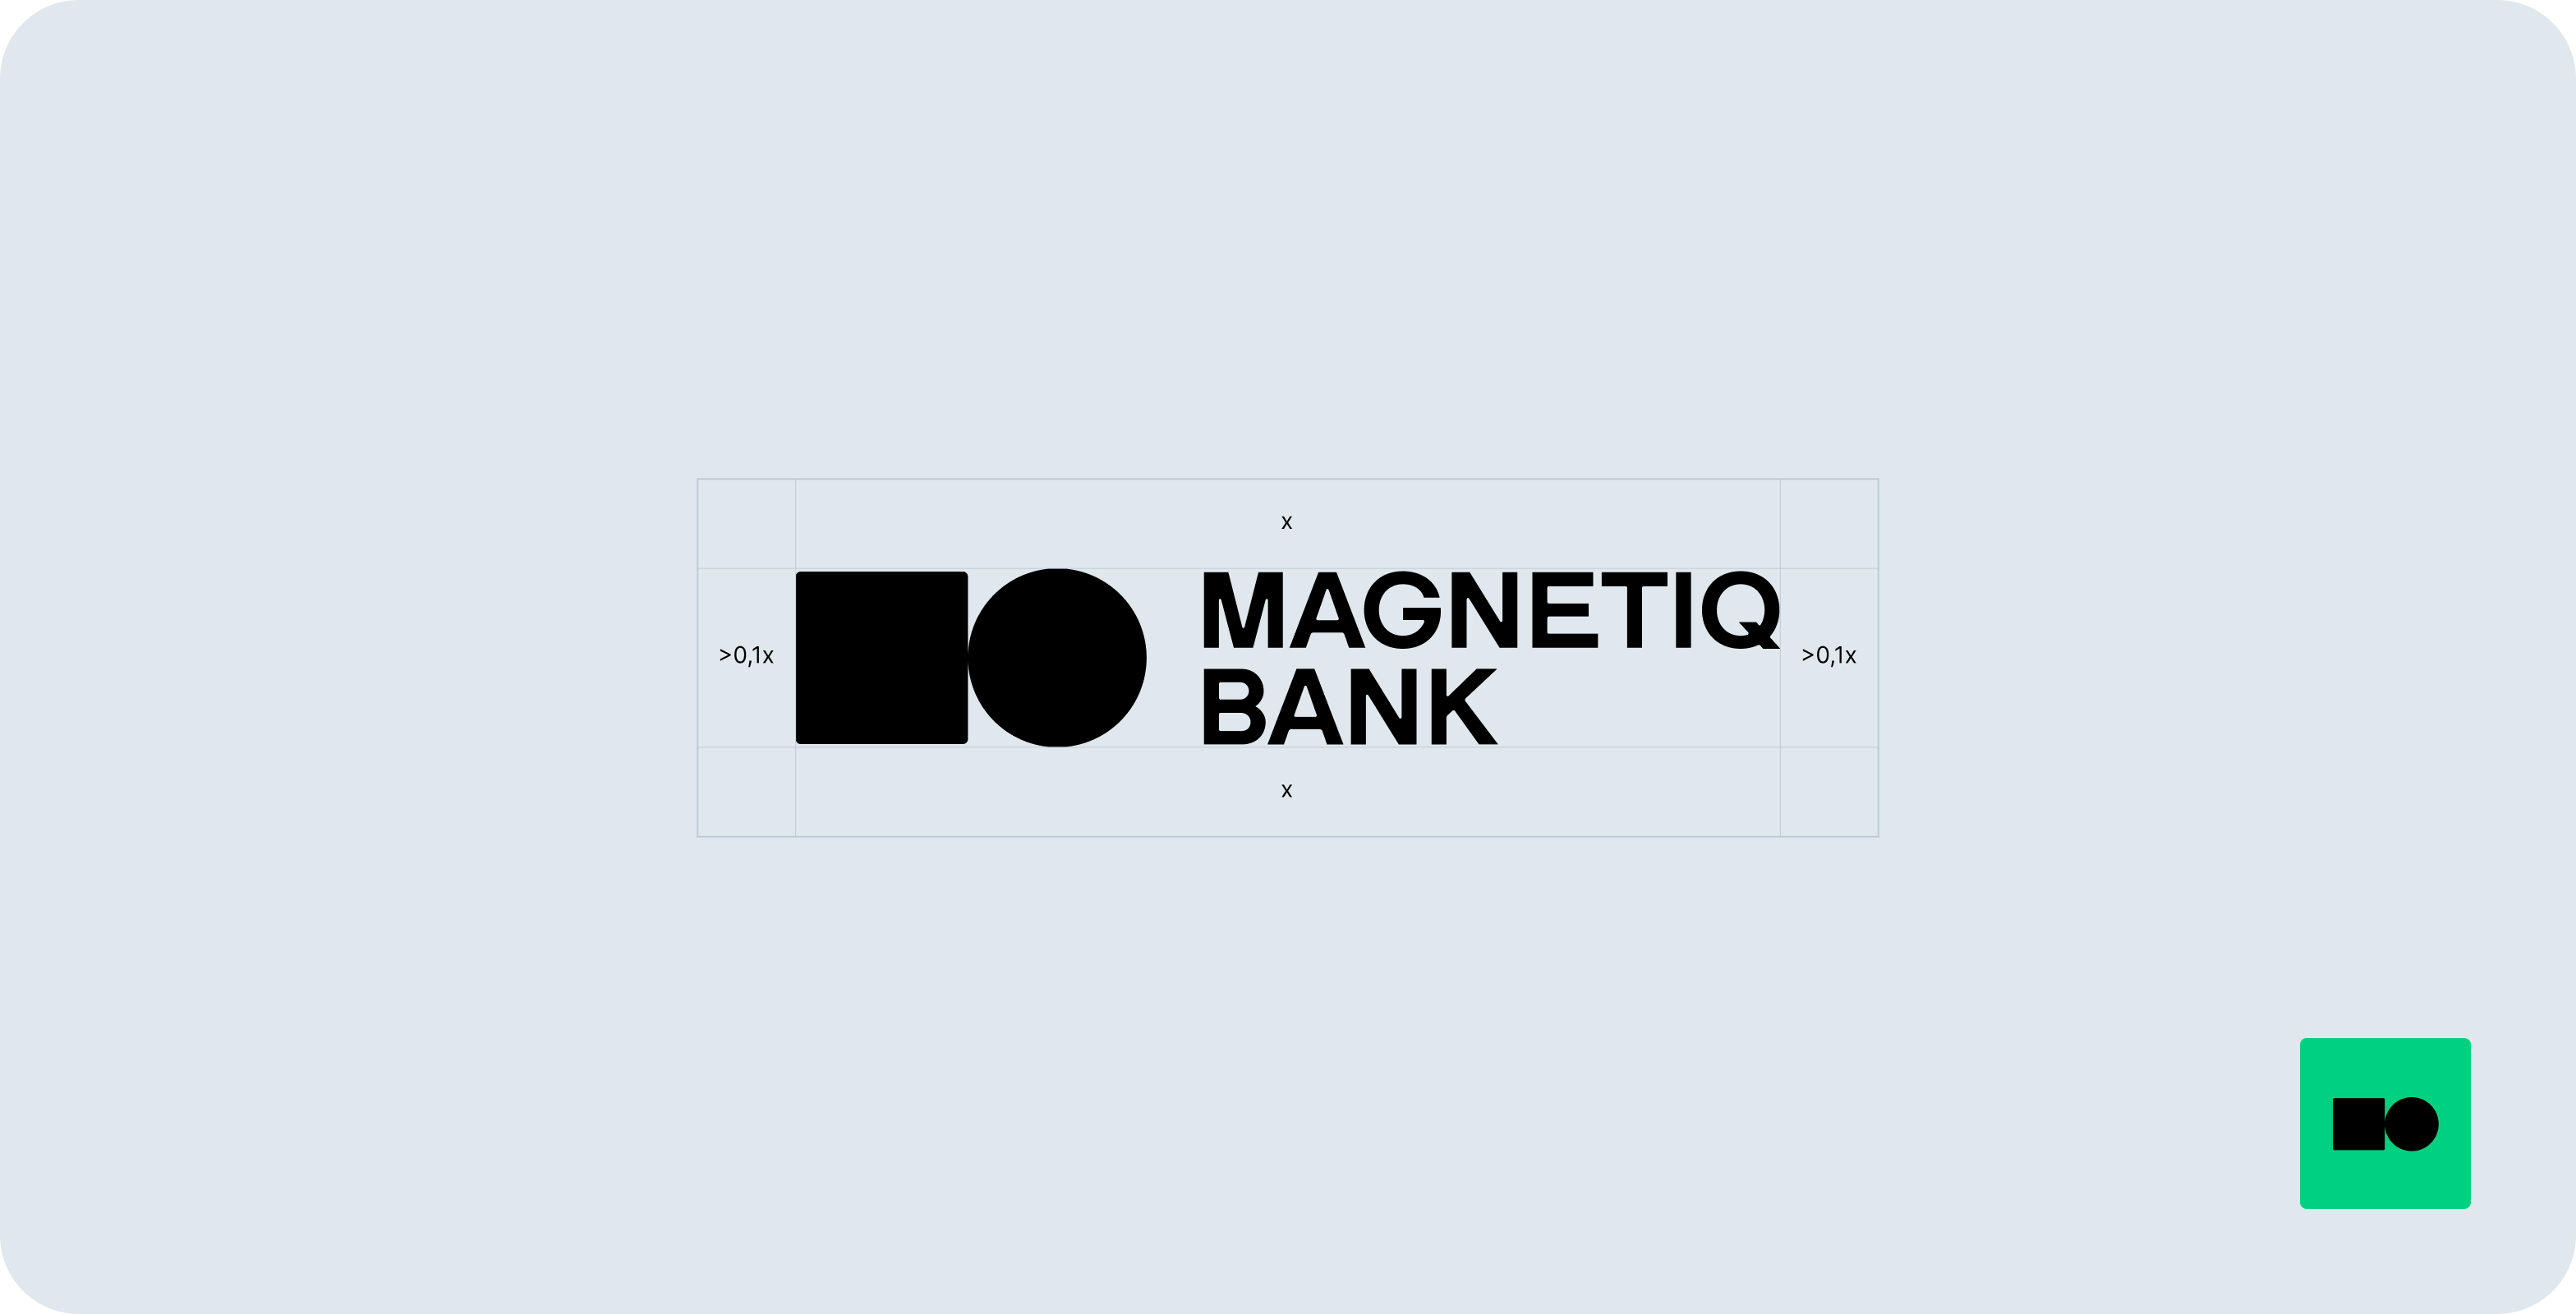 Goodface agency - Logos & brand identity - Magnetiq bank logo.png - Brand identity and logo design services – Goodface agency  - goodface.agency